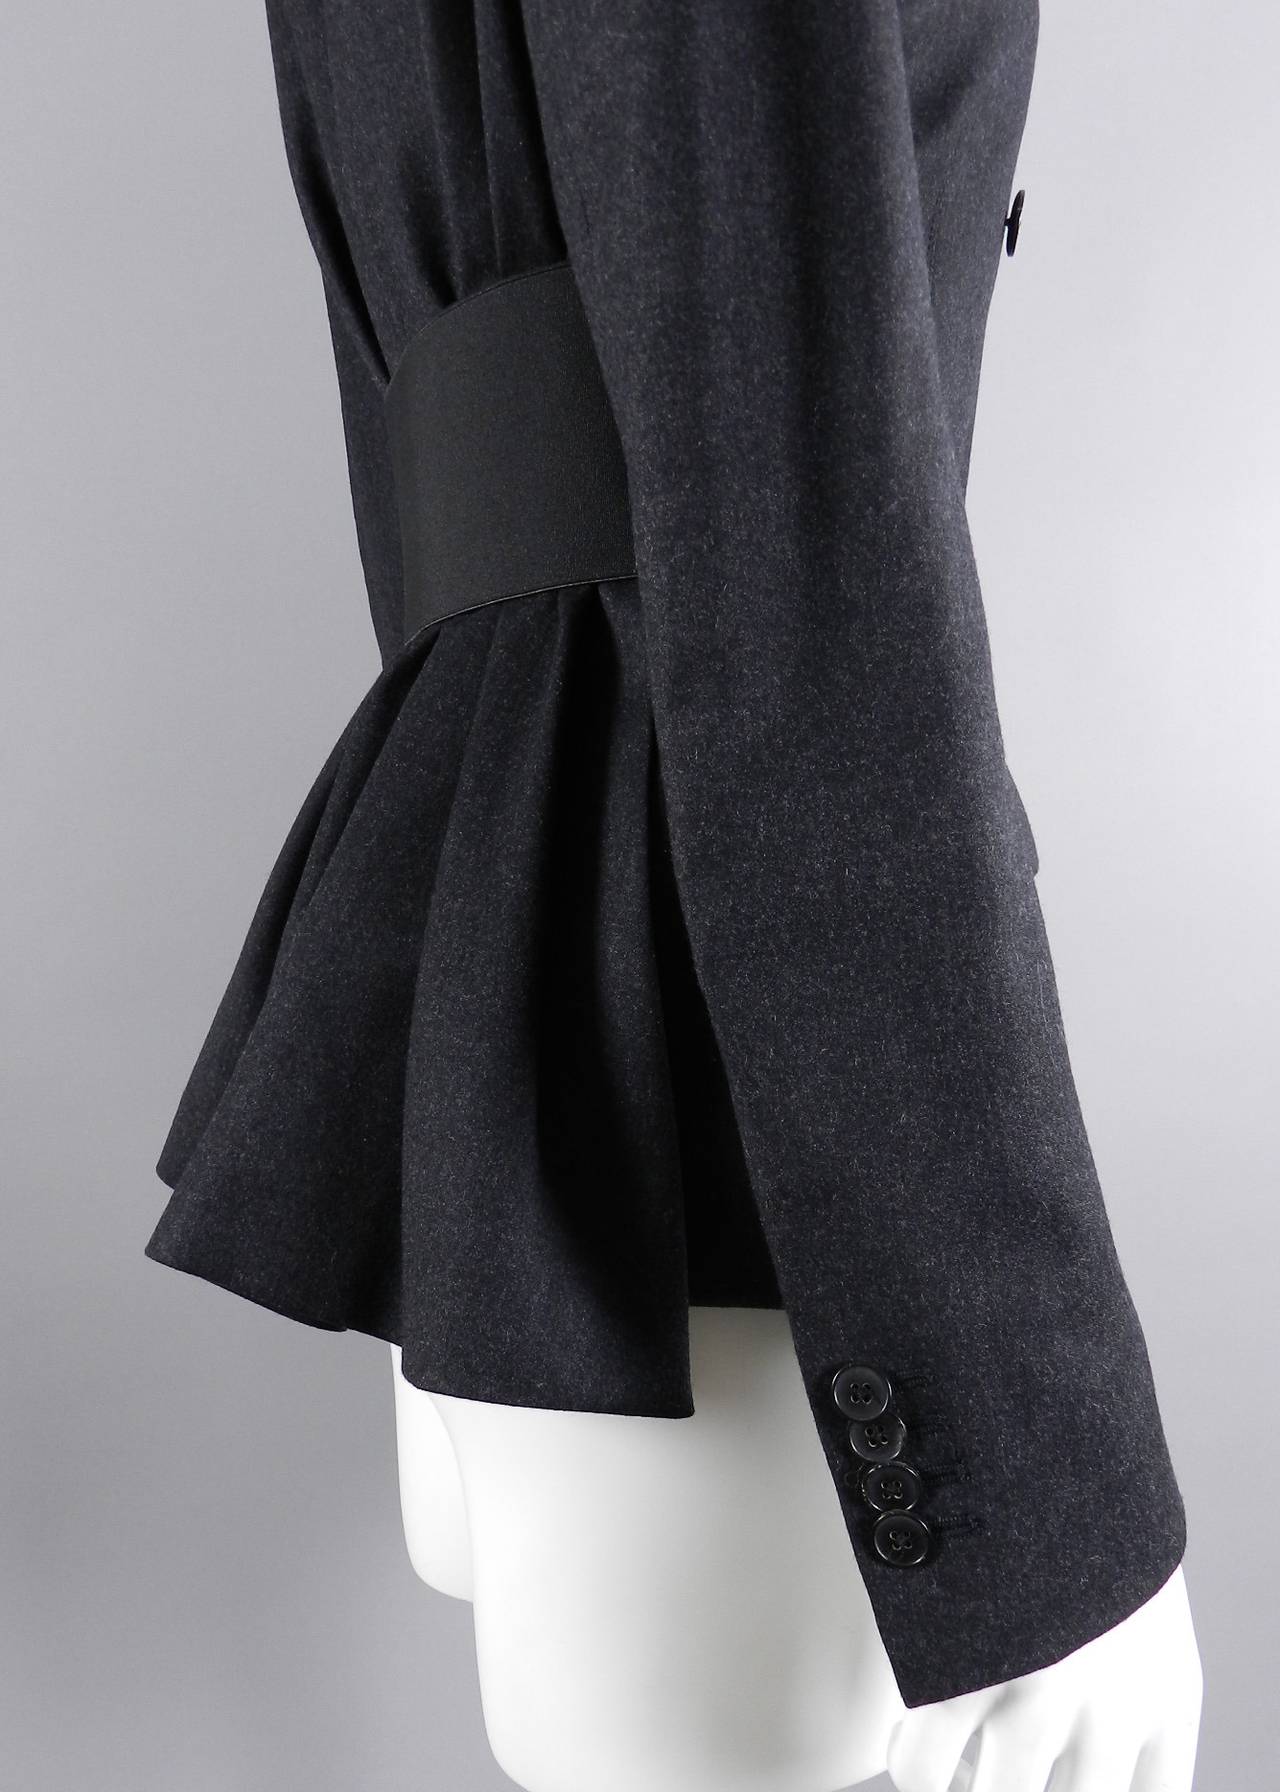 Women's Jean Paul Gaultier Charcoal Grey Wool Blazer Jacket With Back Peplum